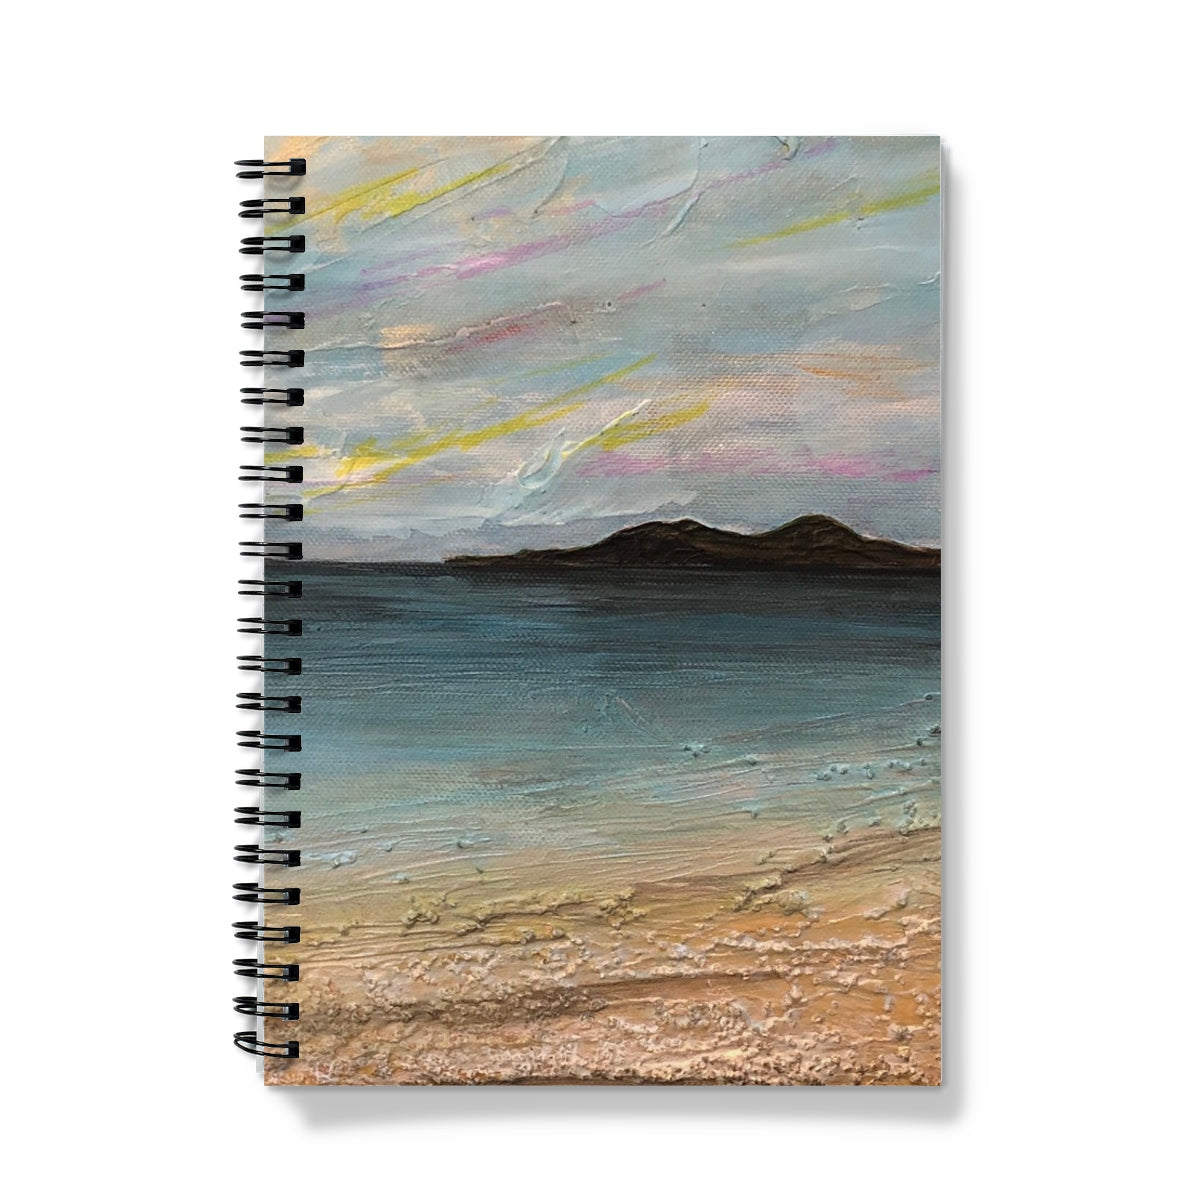 Garrynamonie Beach South Uist Art Gifts Notebook-Journals & Notebooks-Hebridean Islands Art Gallery-A5-Lined-Paintings, Prints, Homeware, Art Gifts From Scotland By Scottish Artist Kevin Hunter